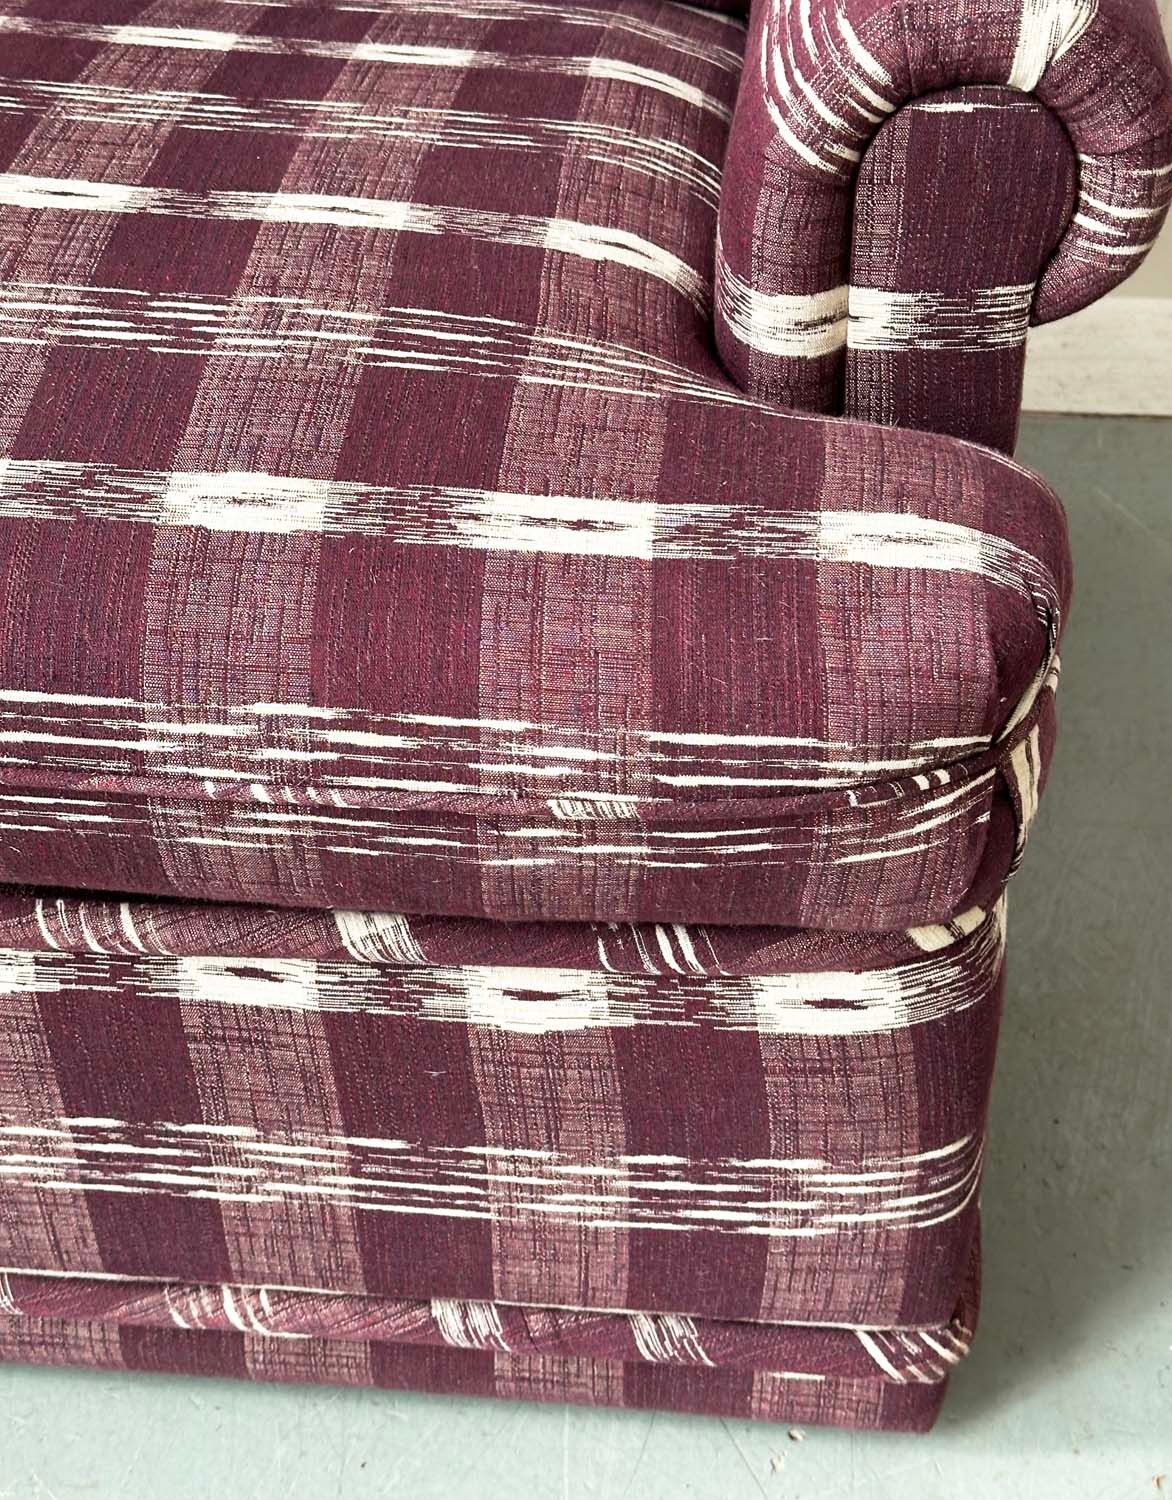 SOFA, Swedish check purple/white upholstery with scroll arms, 203cm W. - Bild 5 aus 18